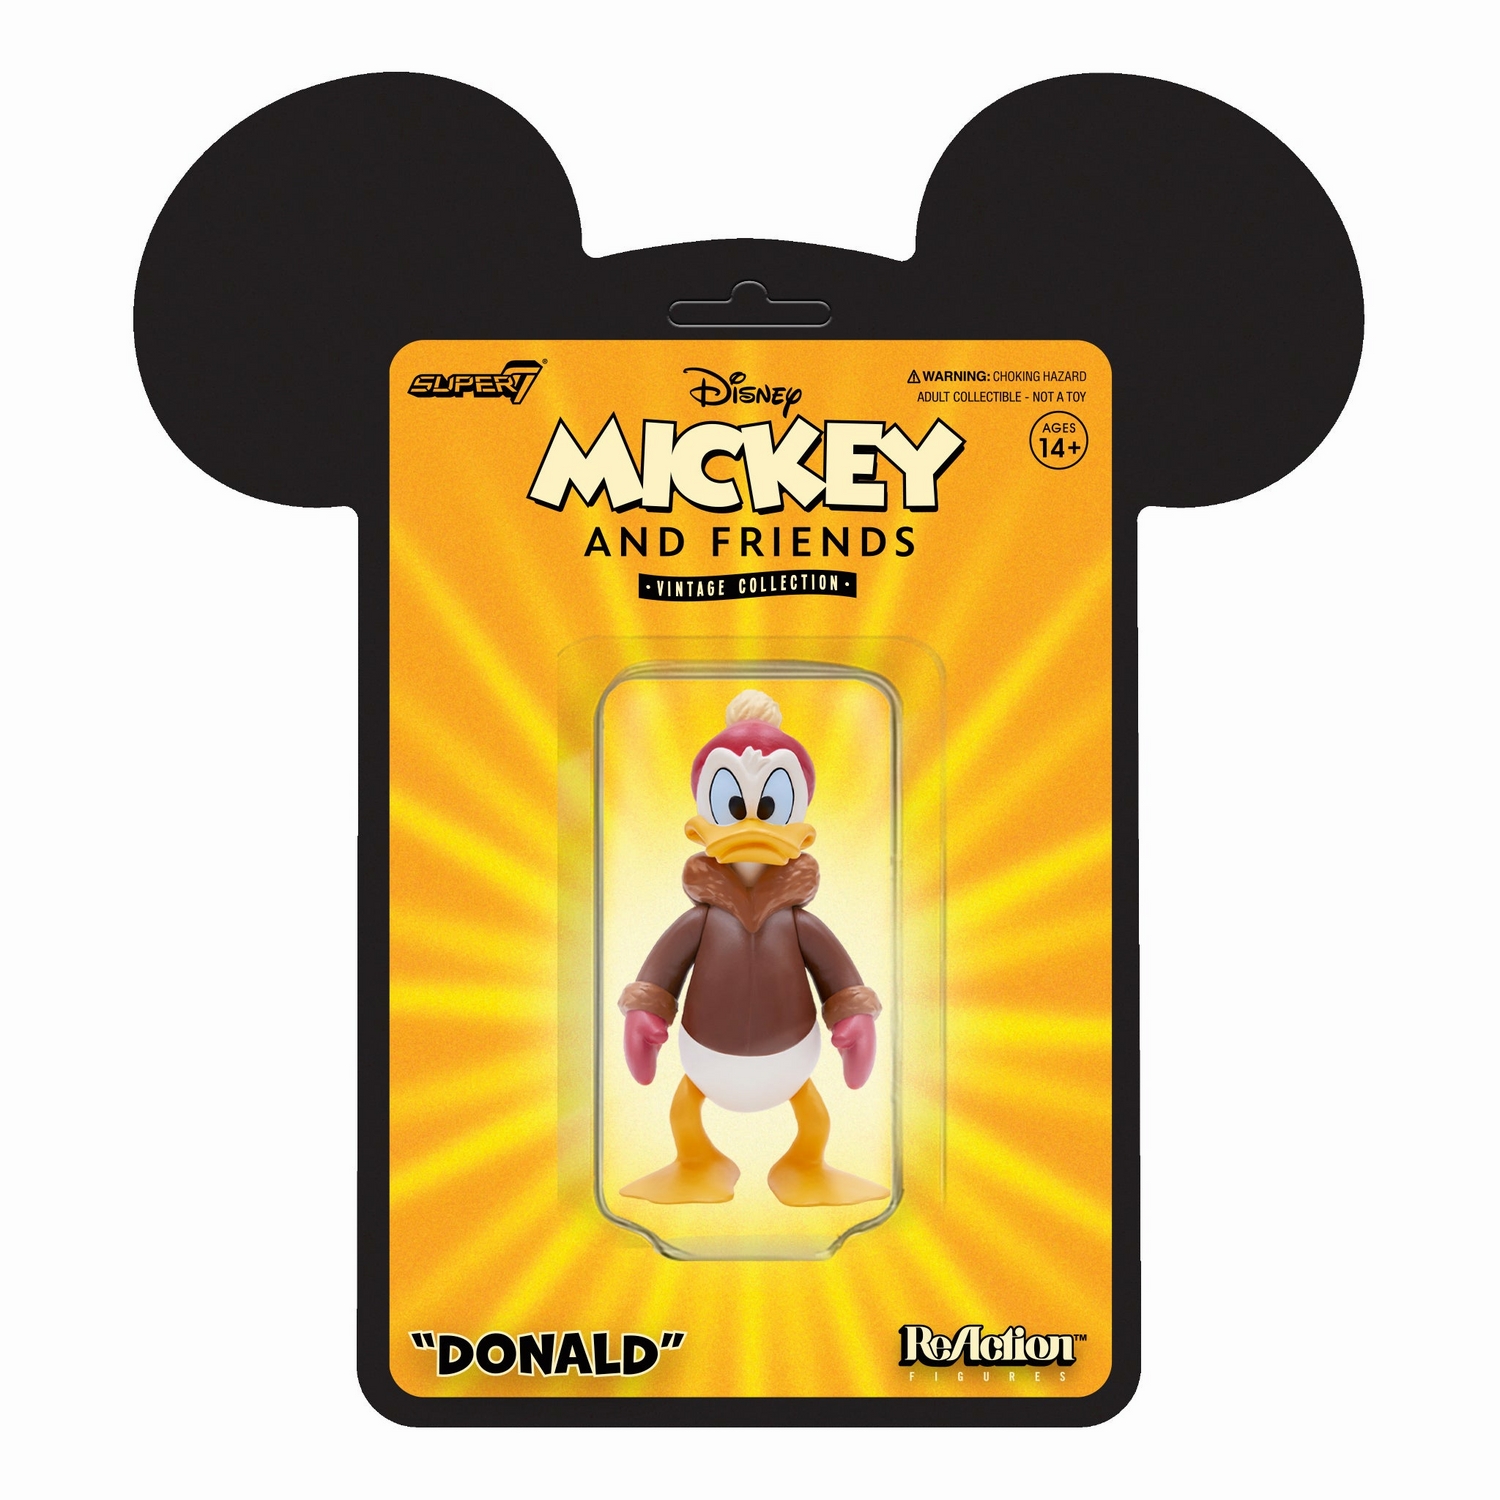 RE-Disney_W1_VintageCollection_DonaldDuck_Angry_card_2048_2048x2048.jpg